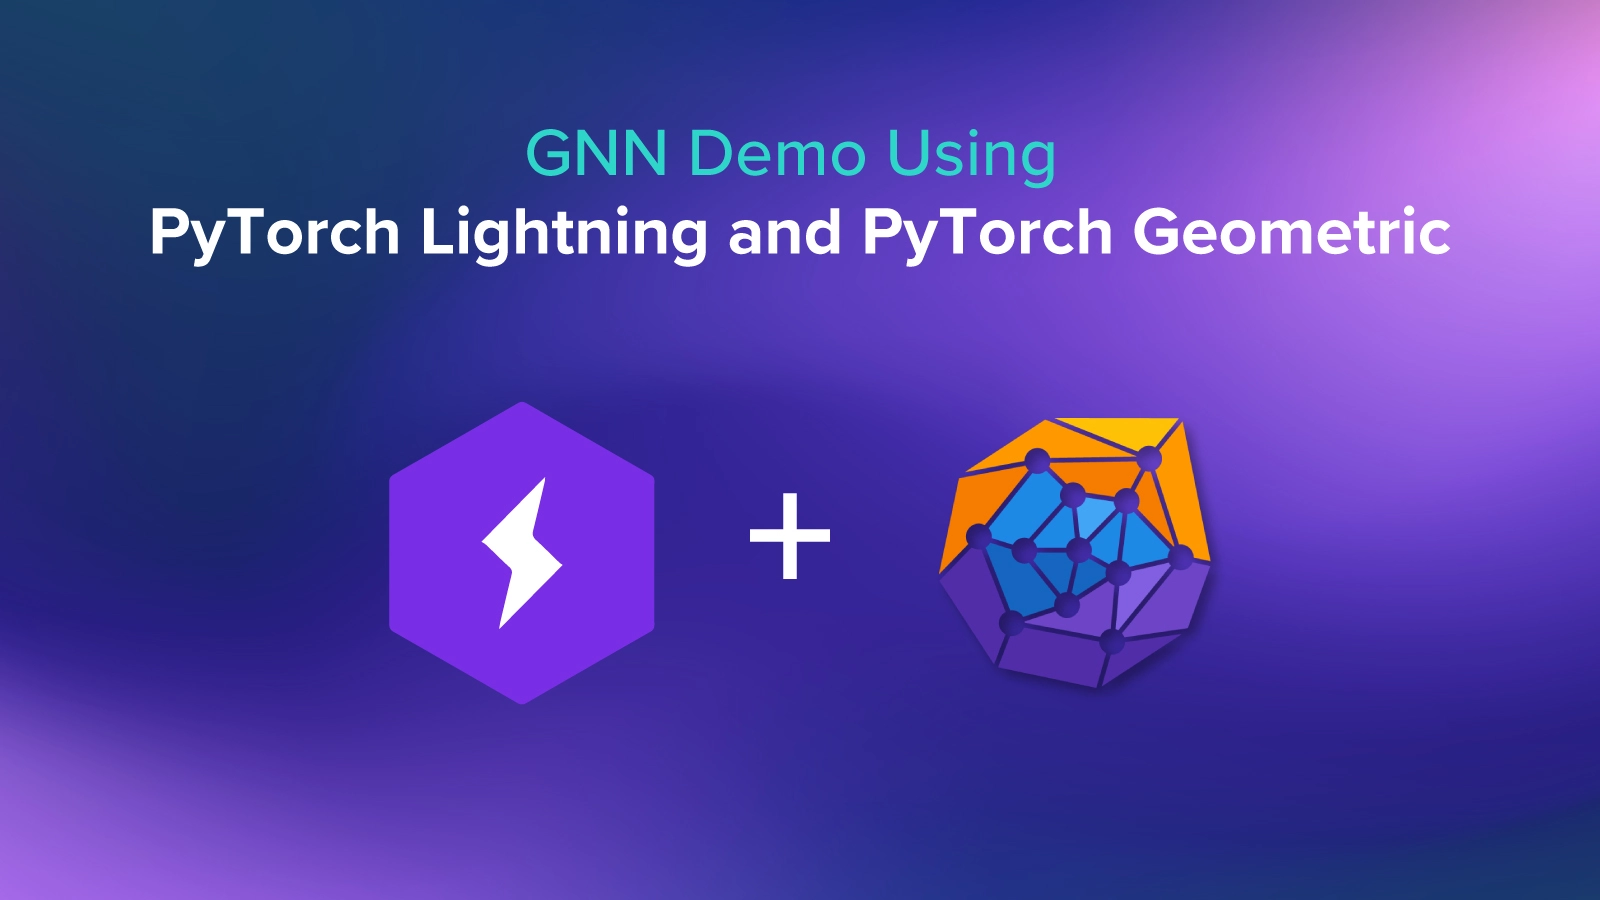 GNN Demo Using PyTorch Lightning and PyTorch Geometric